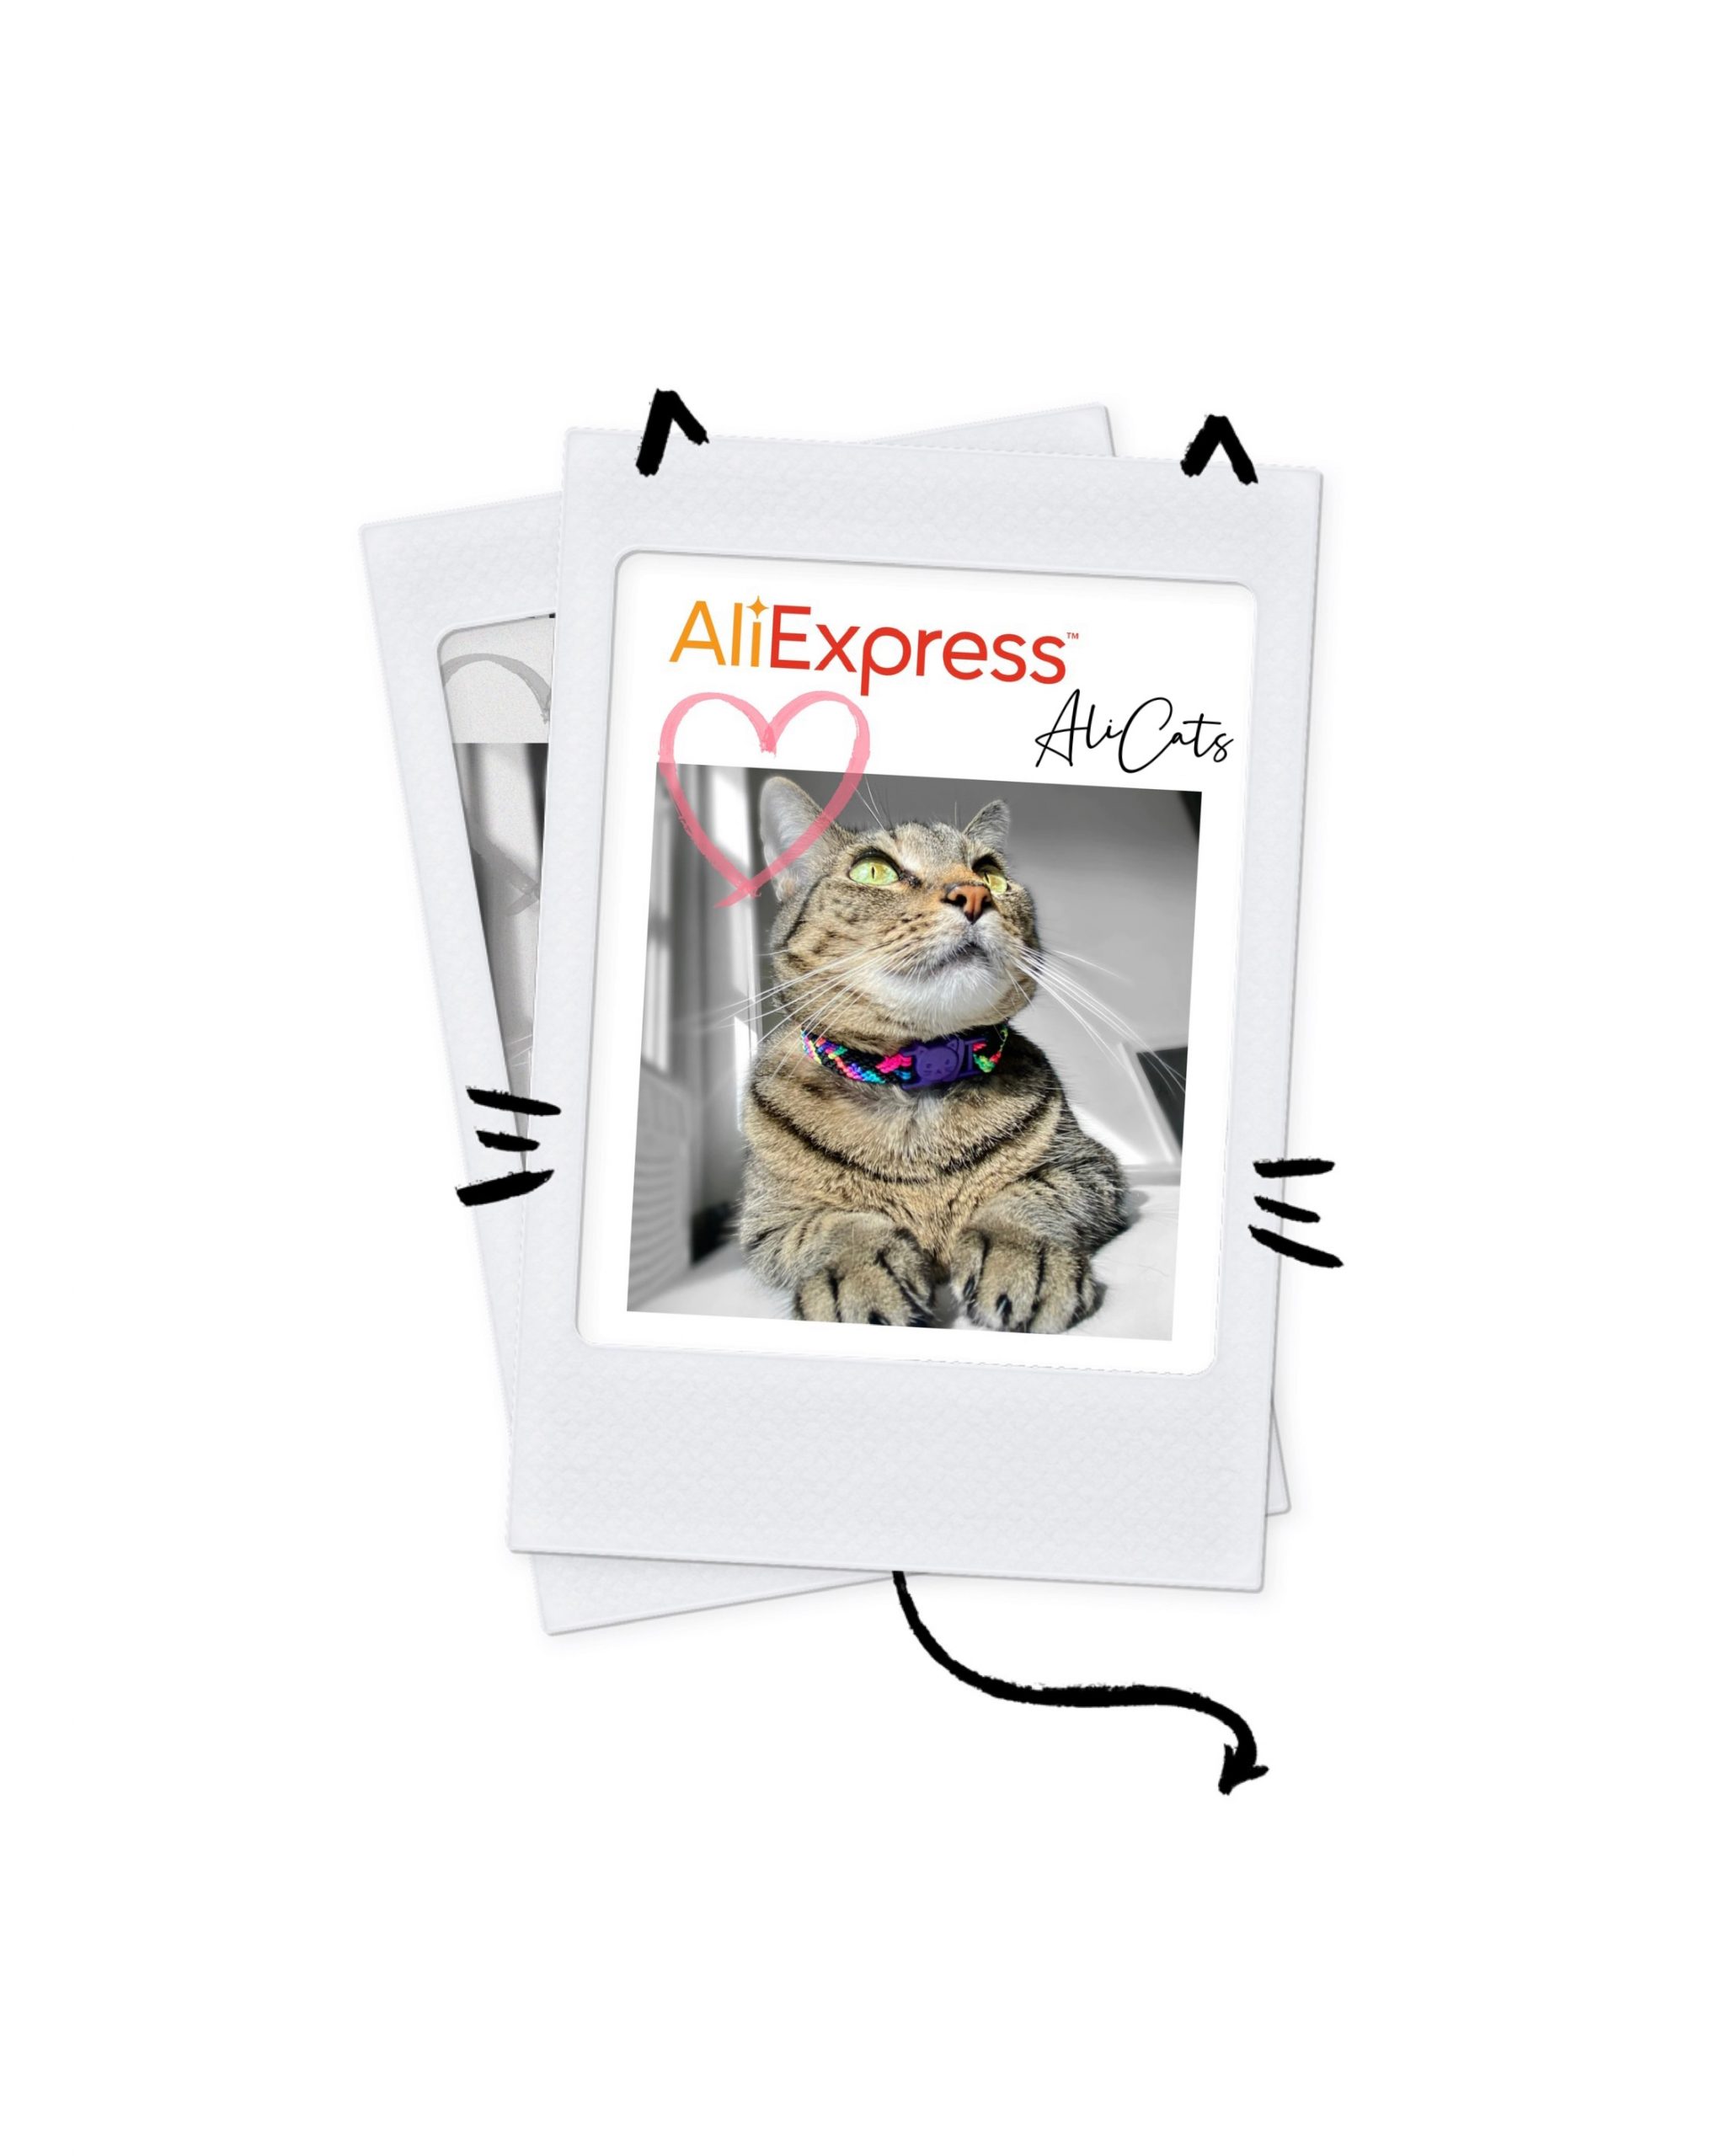 Вы сейчас просматриваете Aliexpress Superdeals